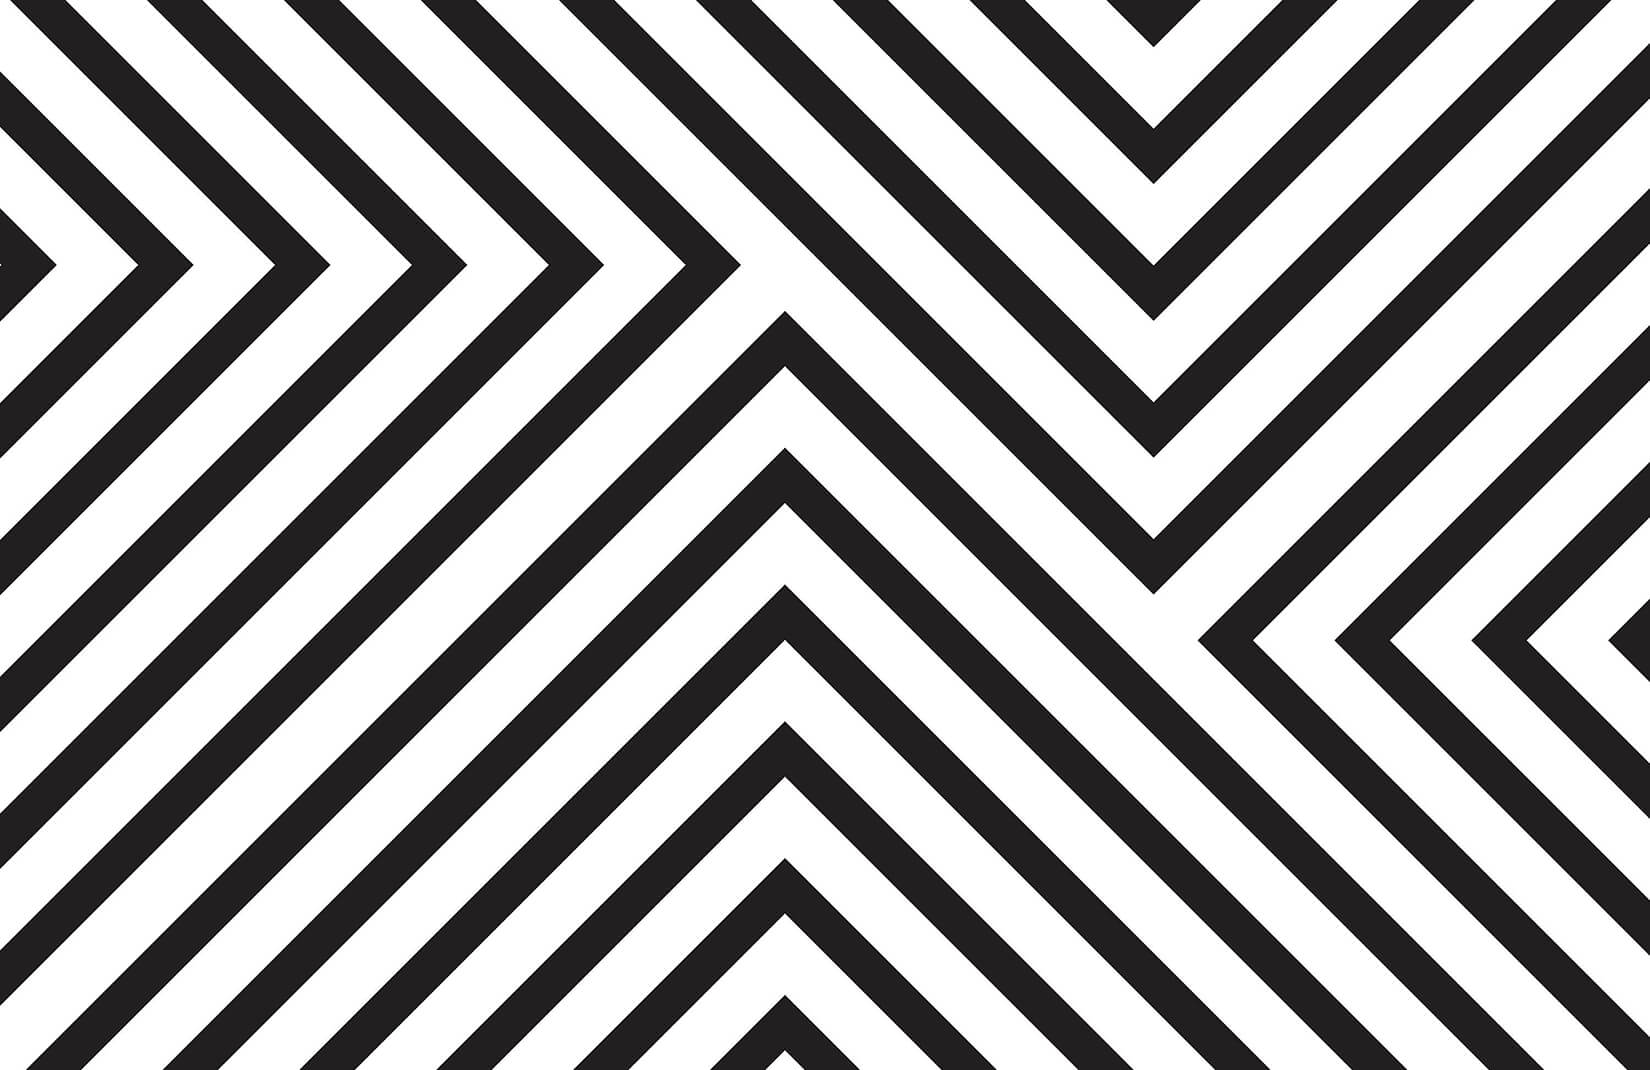 Black and White Stripes Wallpaper Free Black and White Stripes Background